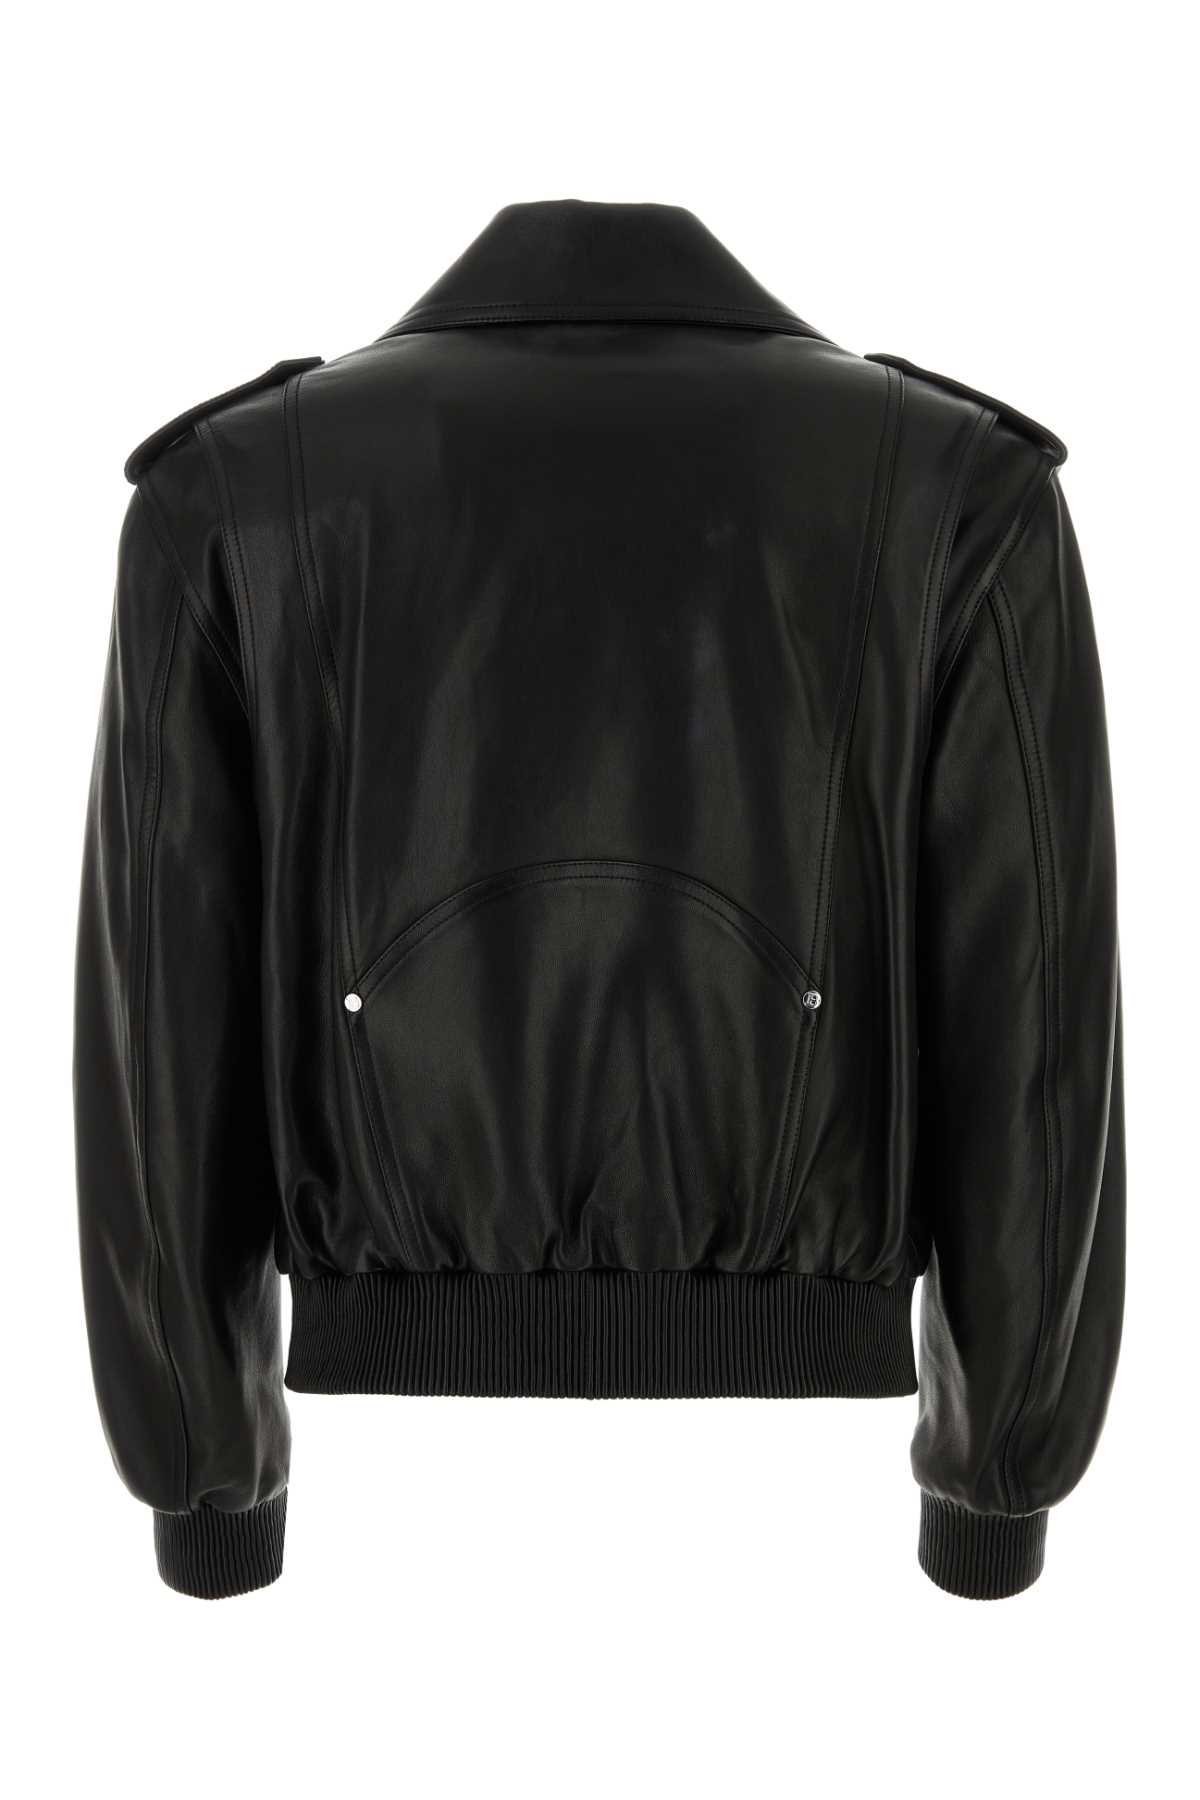 Balmain Black Leather Bomber Jacket In 0panoir